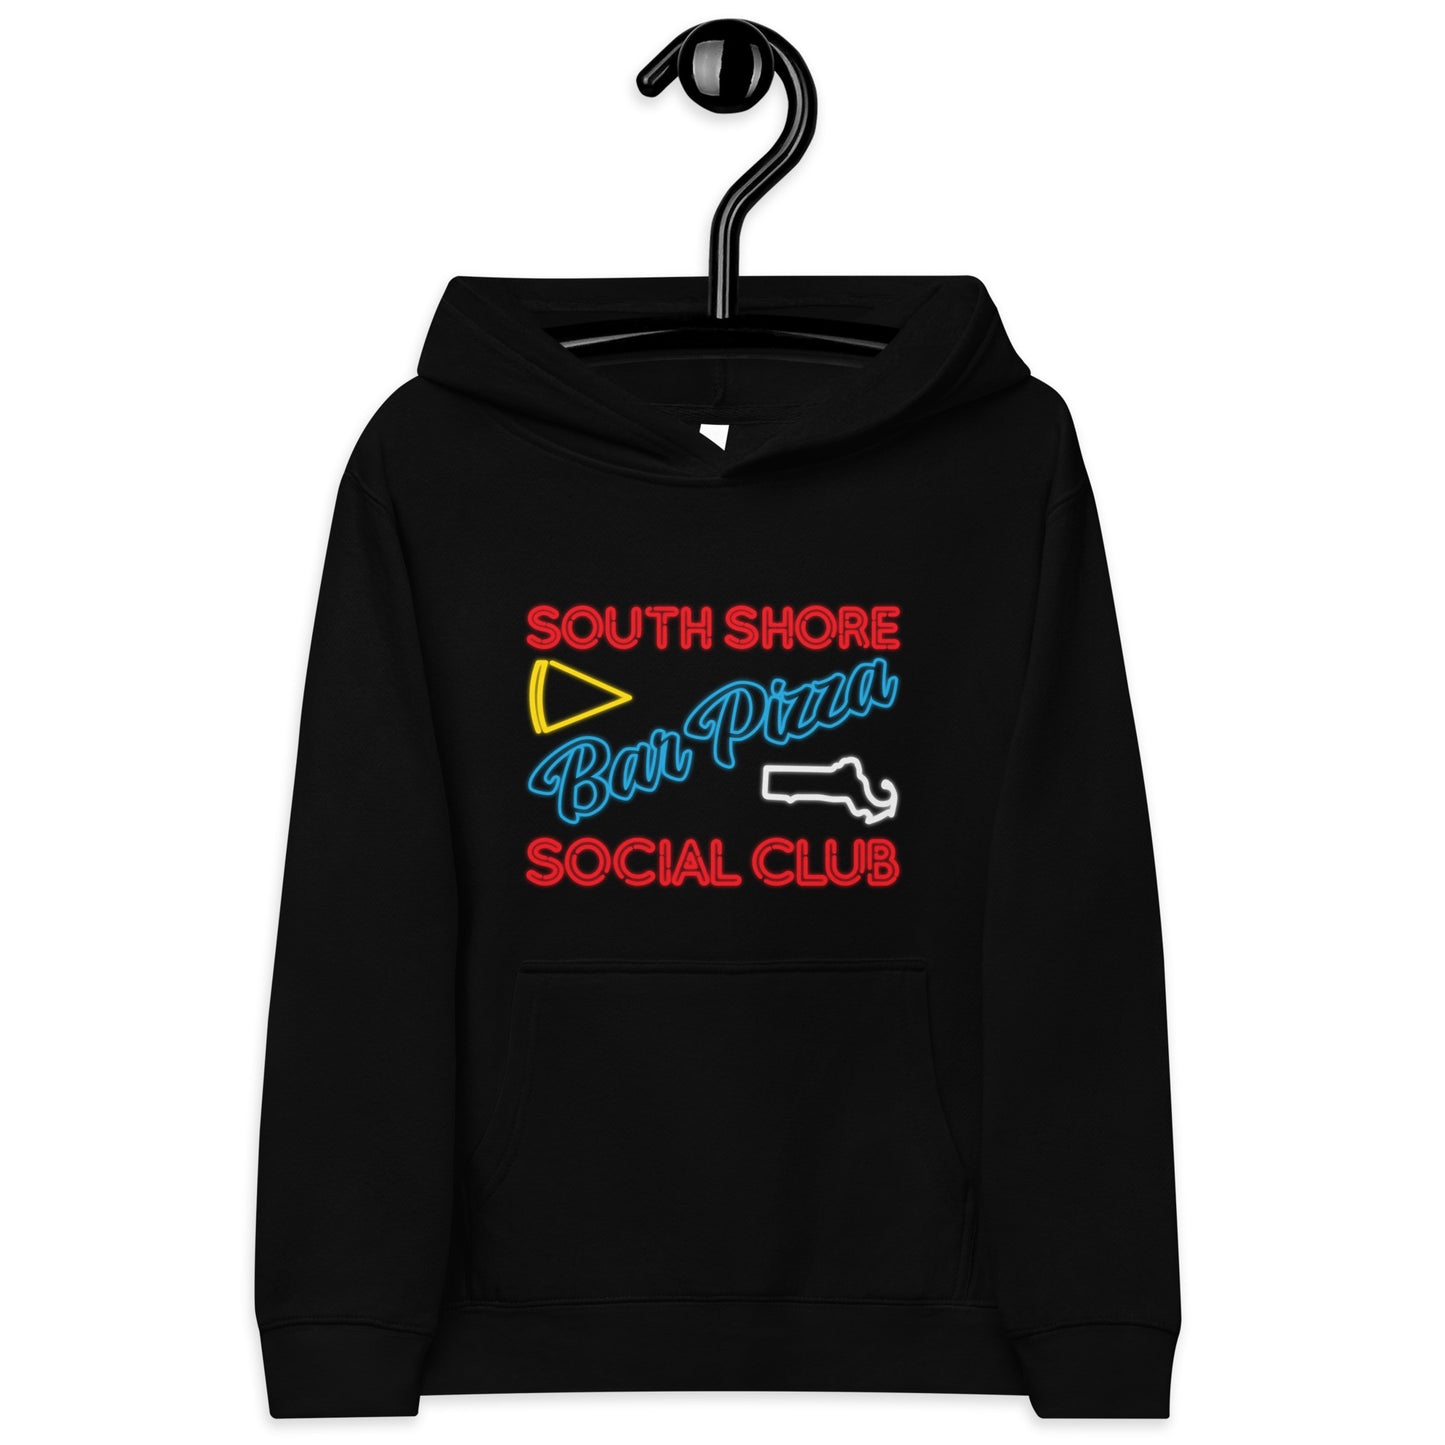 Kids South Shore Bar Pizza Social Club Hoodie